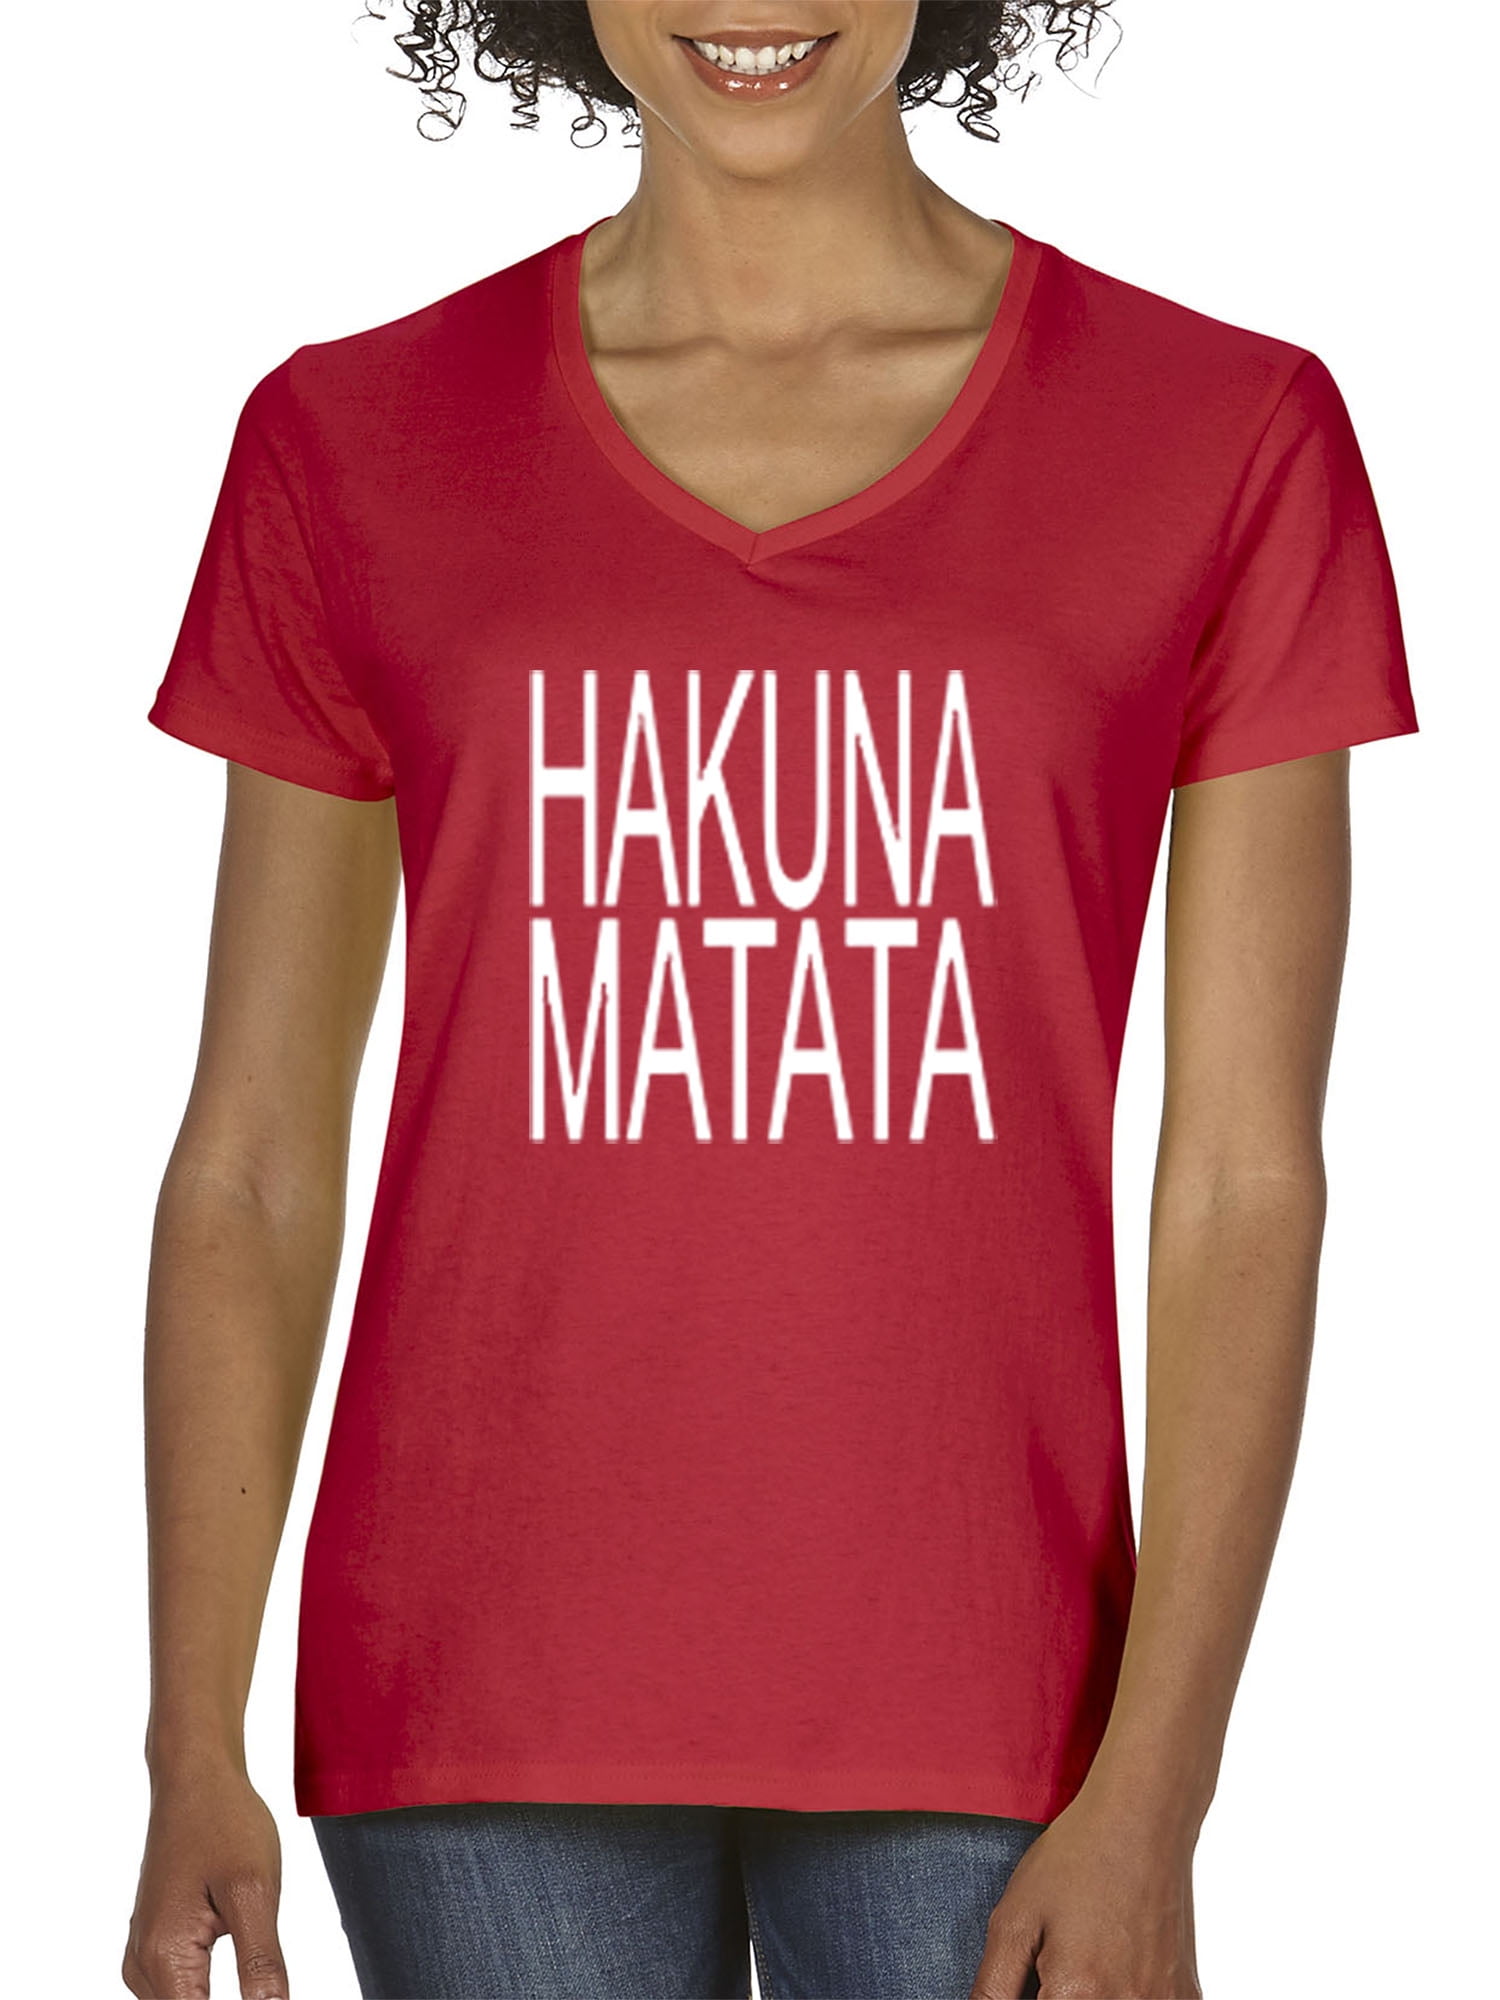 PUMBA Tshirt Womens Ladies Lion King Funny Gift Present Simba Hakuna Matata